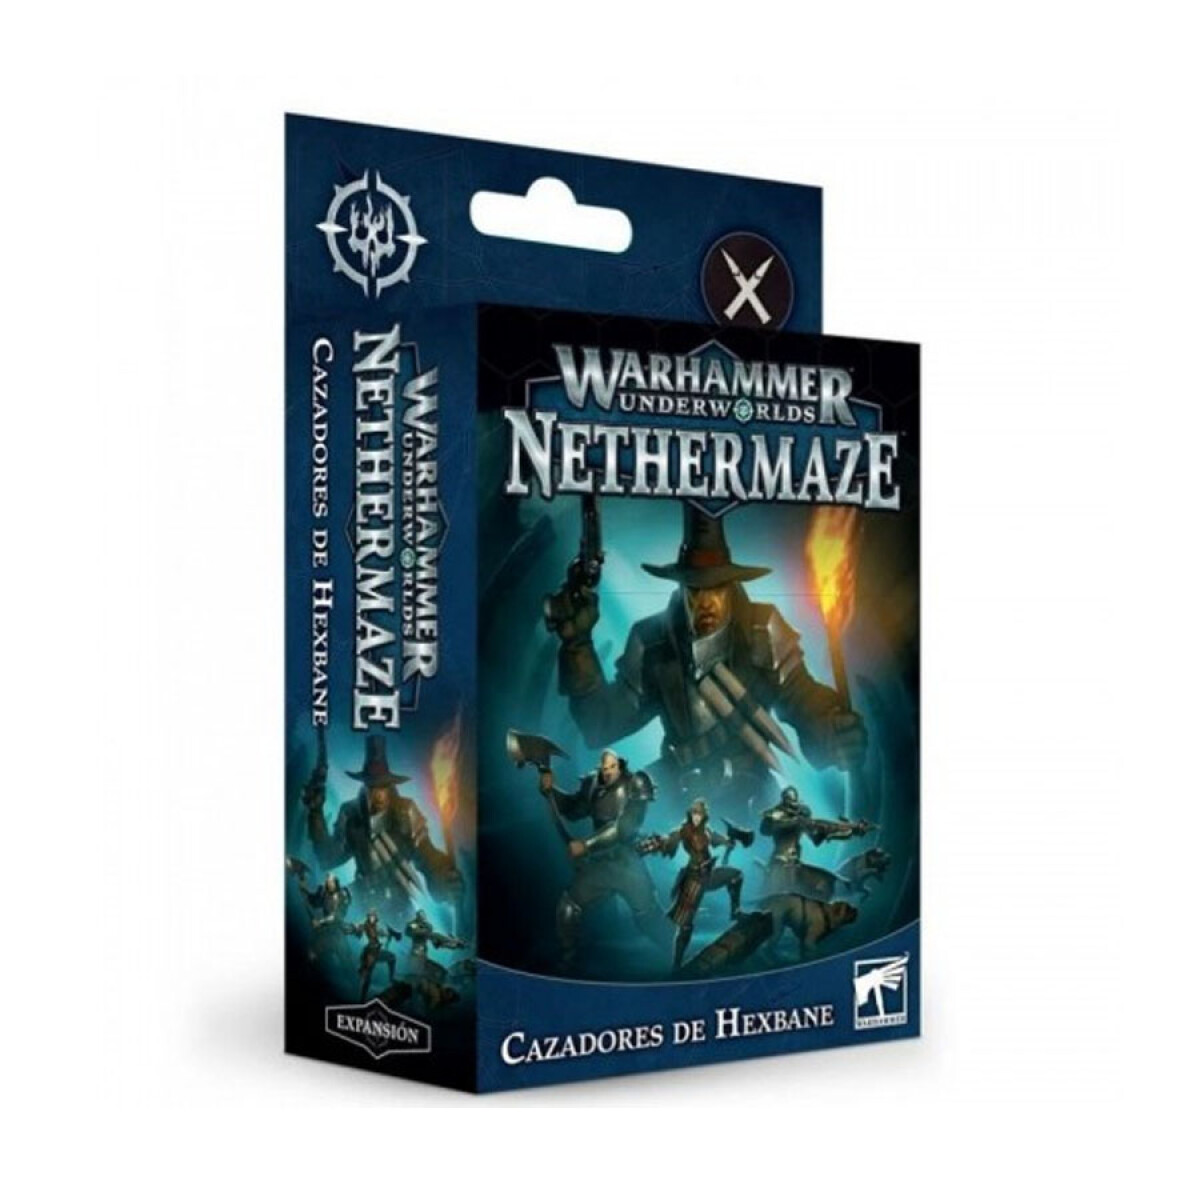 Warhammer Underworlds Nethermaze - Cazadores de Hexbane (Expansión) [Español] 